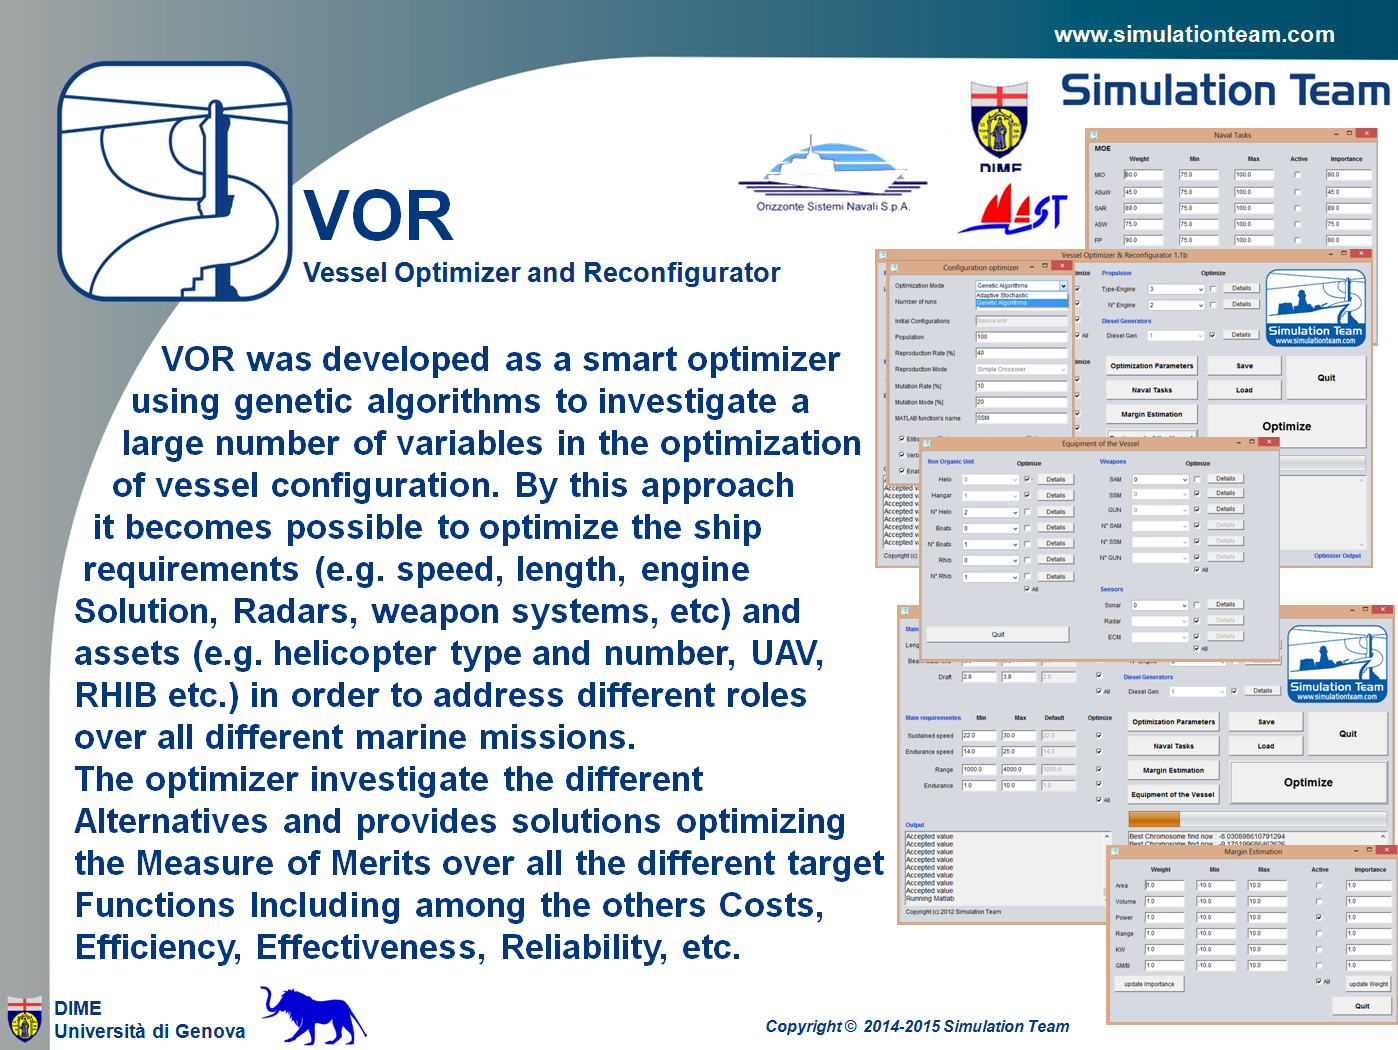 VOR - Vessel Optimizer and Reconfigurator